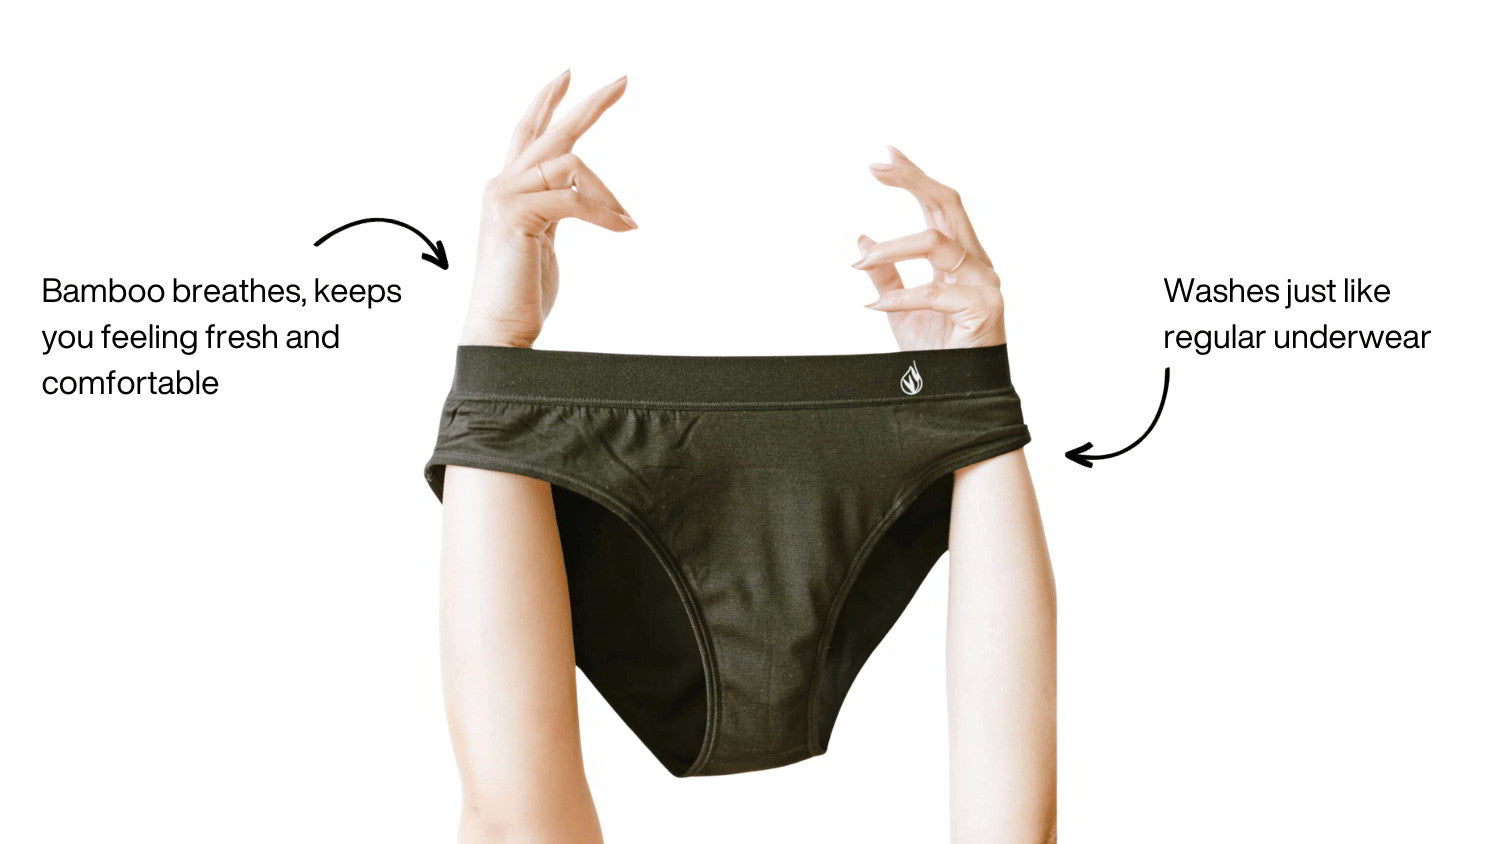 How Does Period Underwear Work? - Infano Women's Health